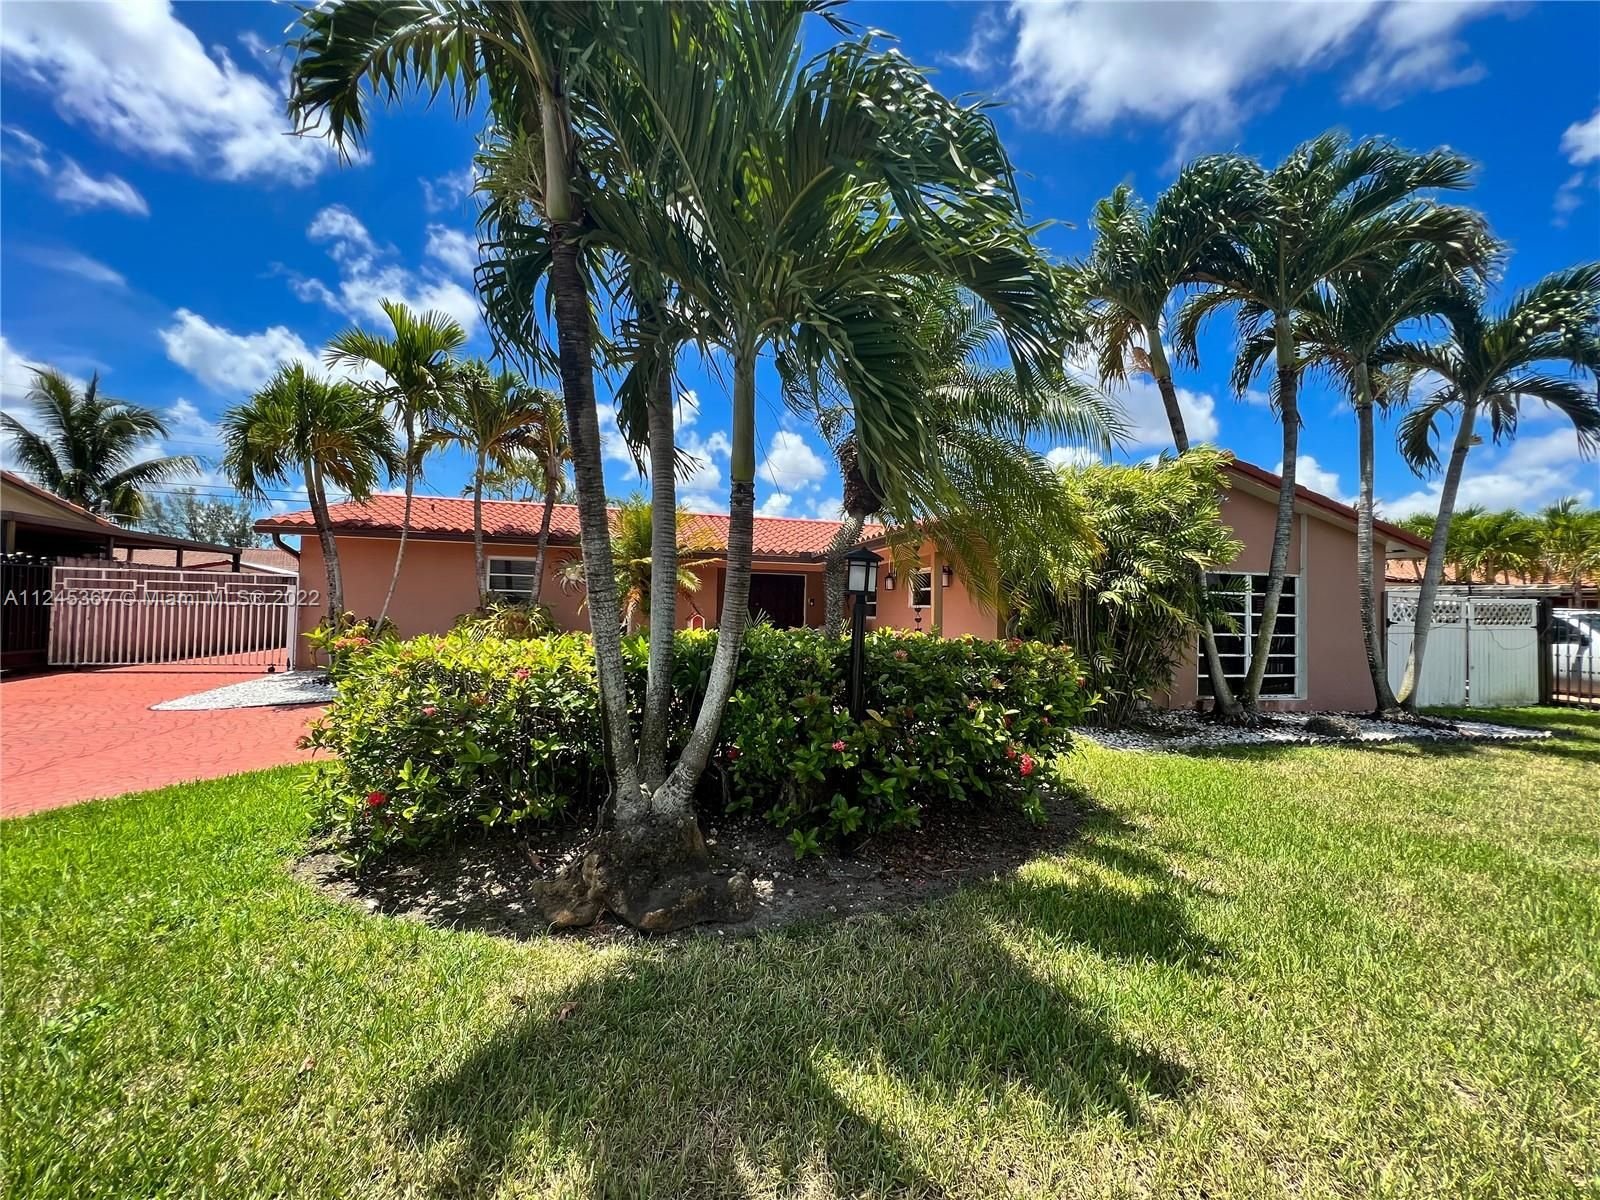 Real estate property located at 12250 40th St, Miami-Dade County, Miami, FL